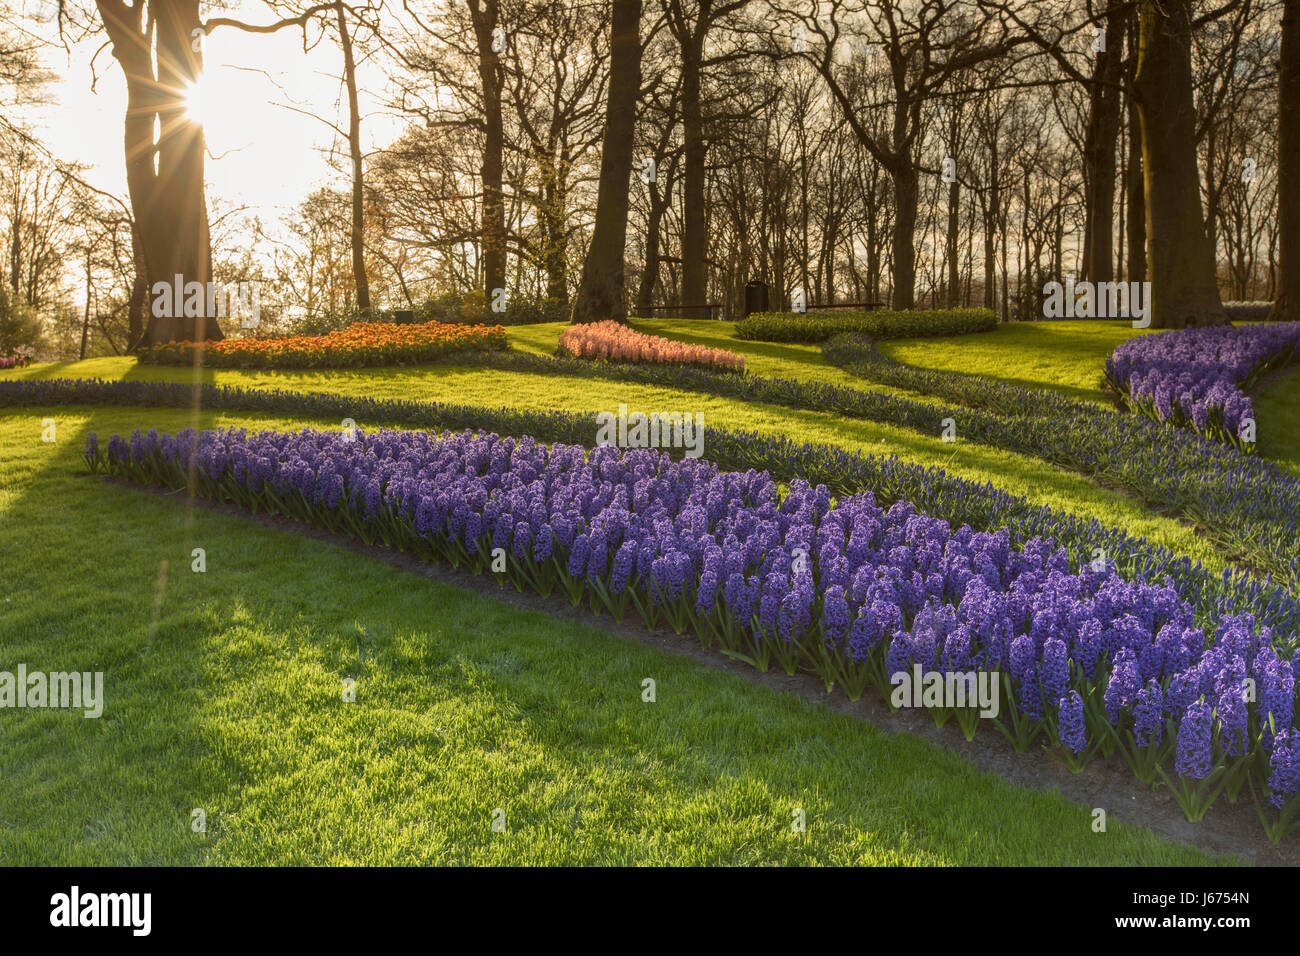 Fiori in giardini Keukenhof Lisse, Paesi Bassi Foto Stock